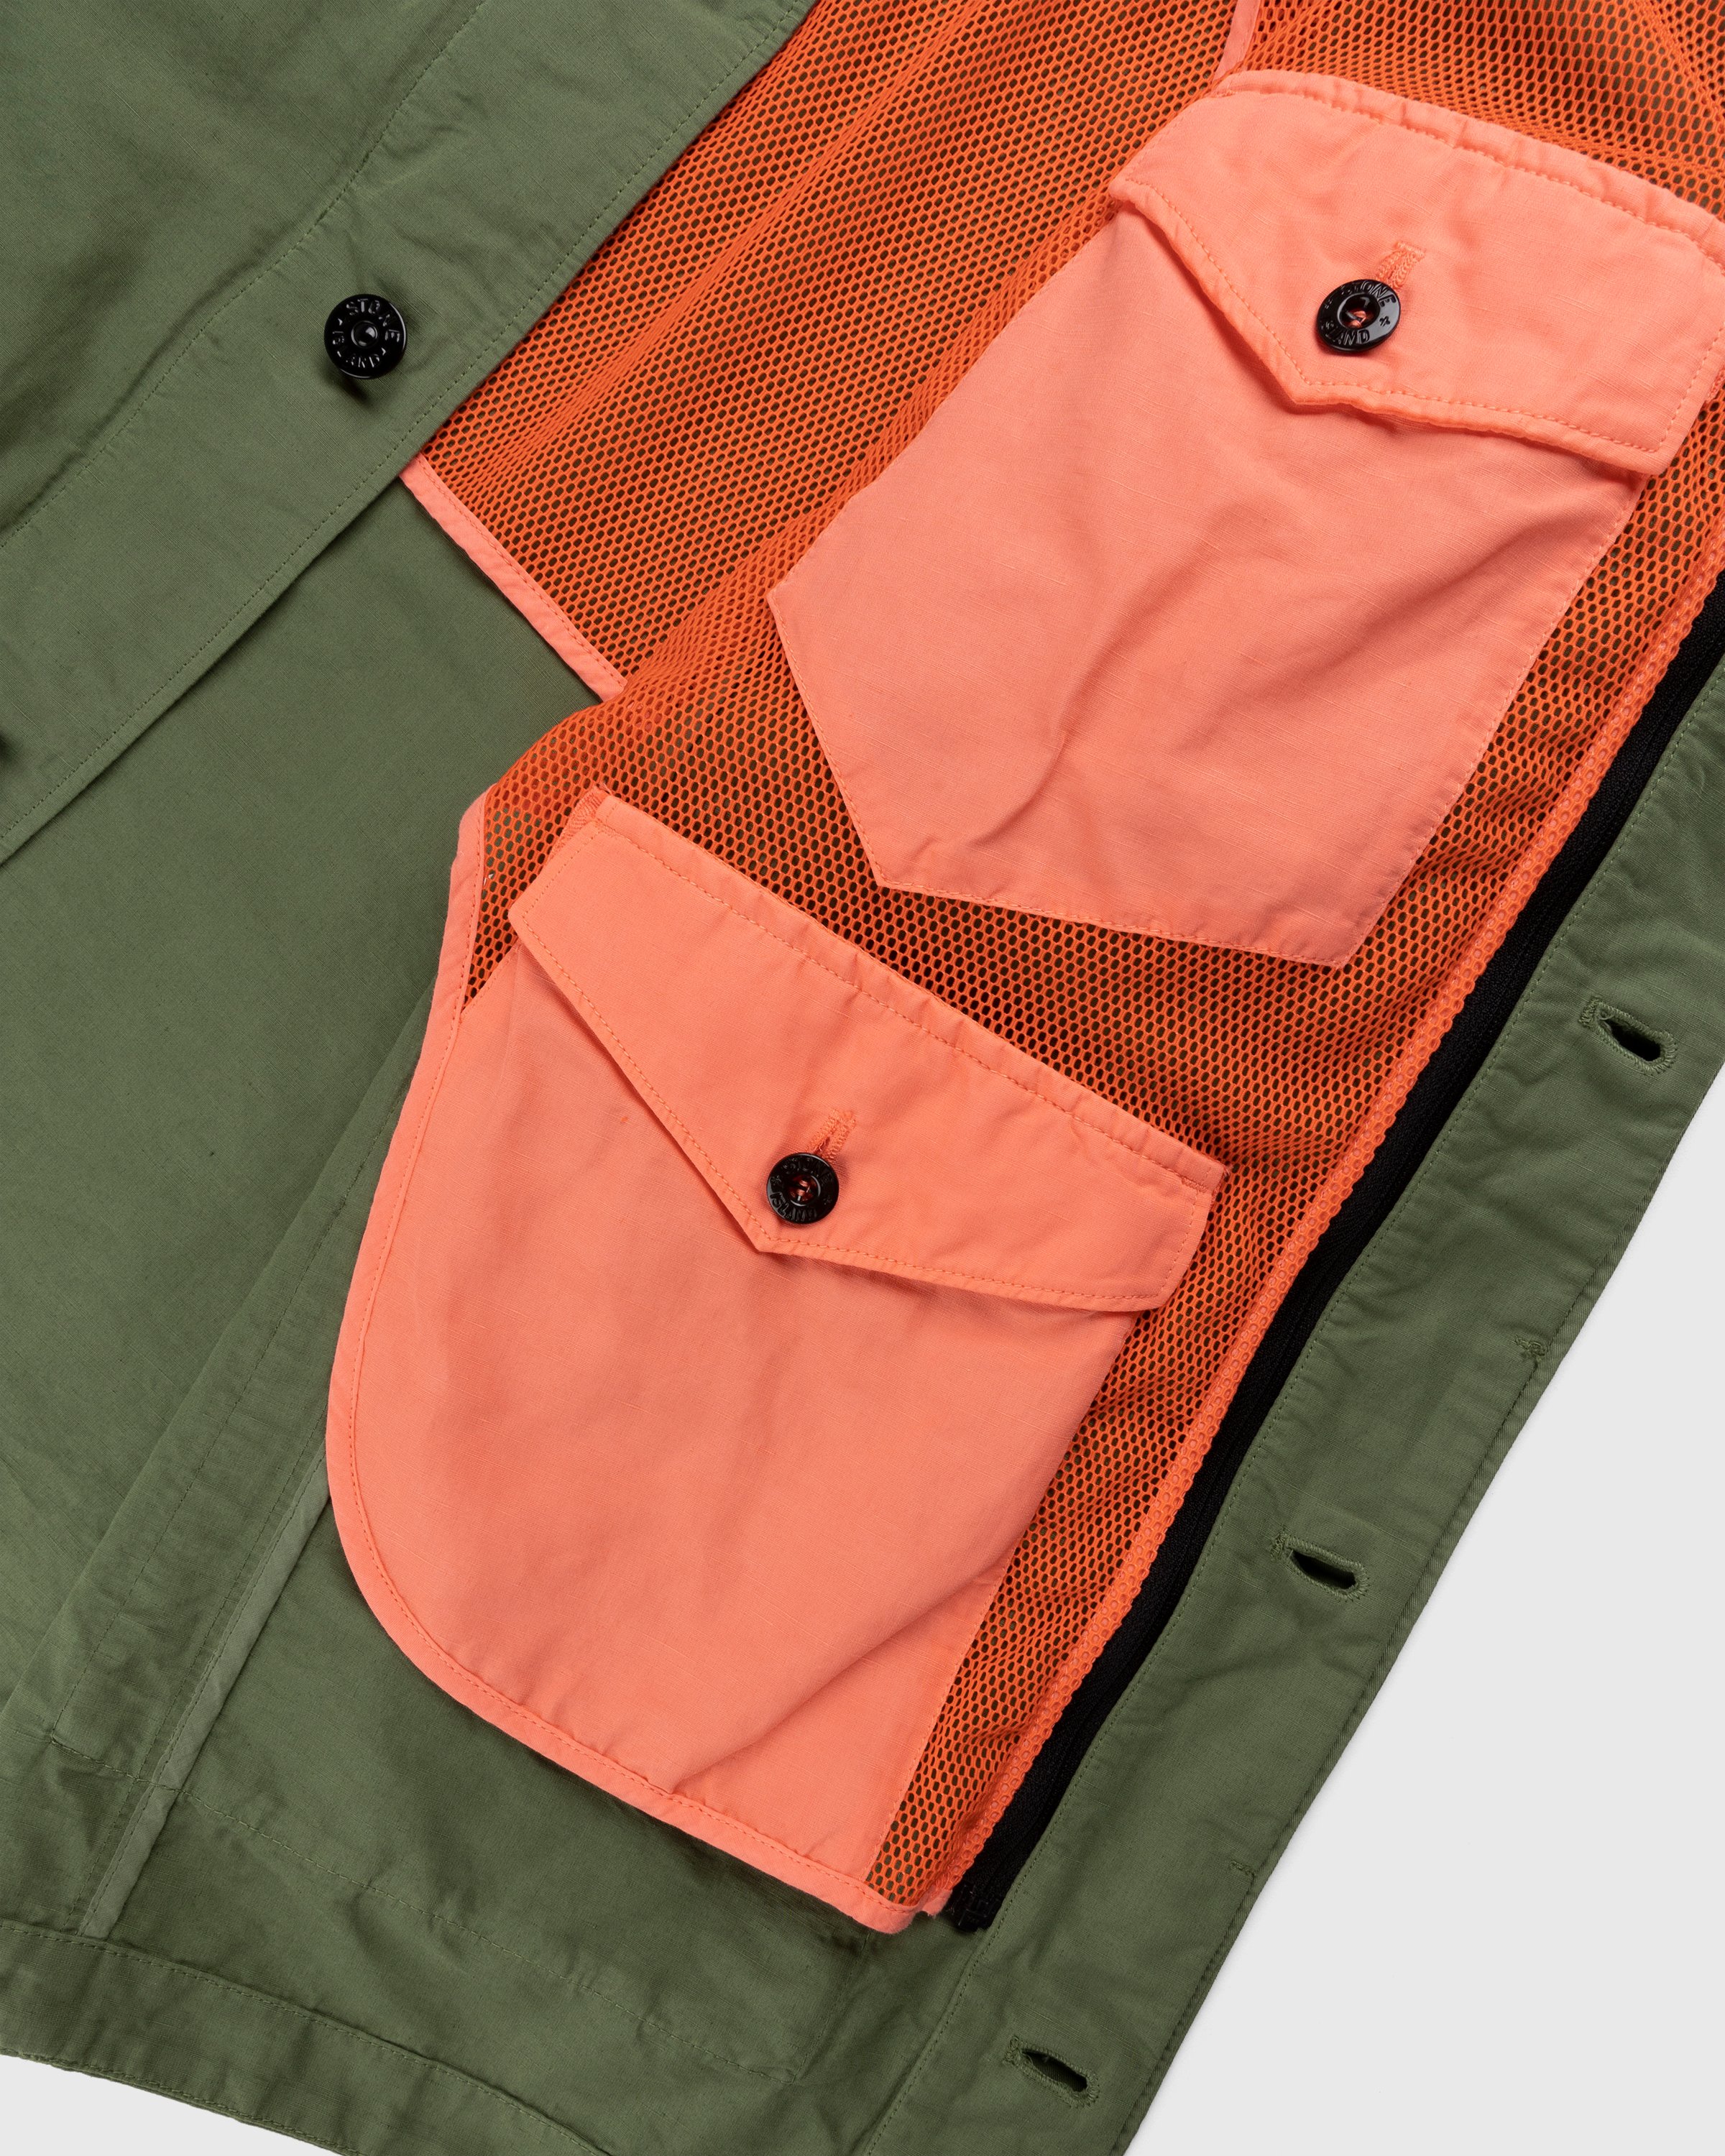 Stone Island - 42406 Garment-Dyed Shirt Jacket With Detachable Vest Olive - Clothing - Green - Image 7